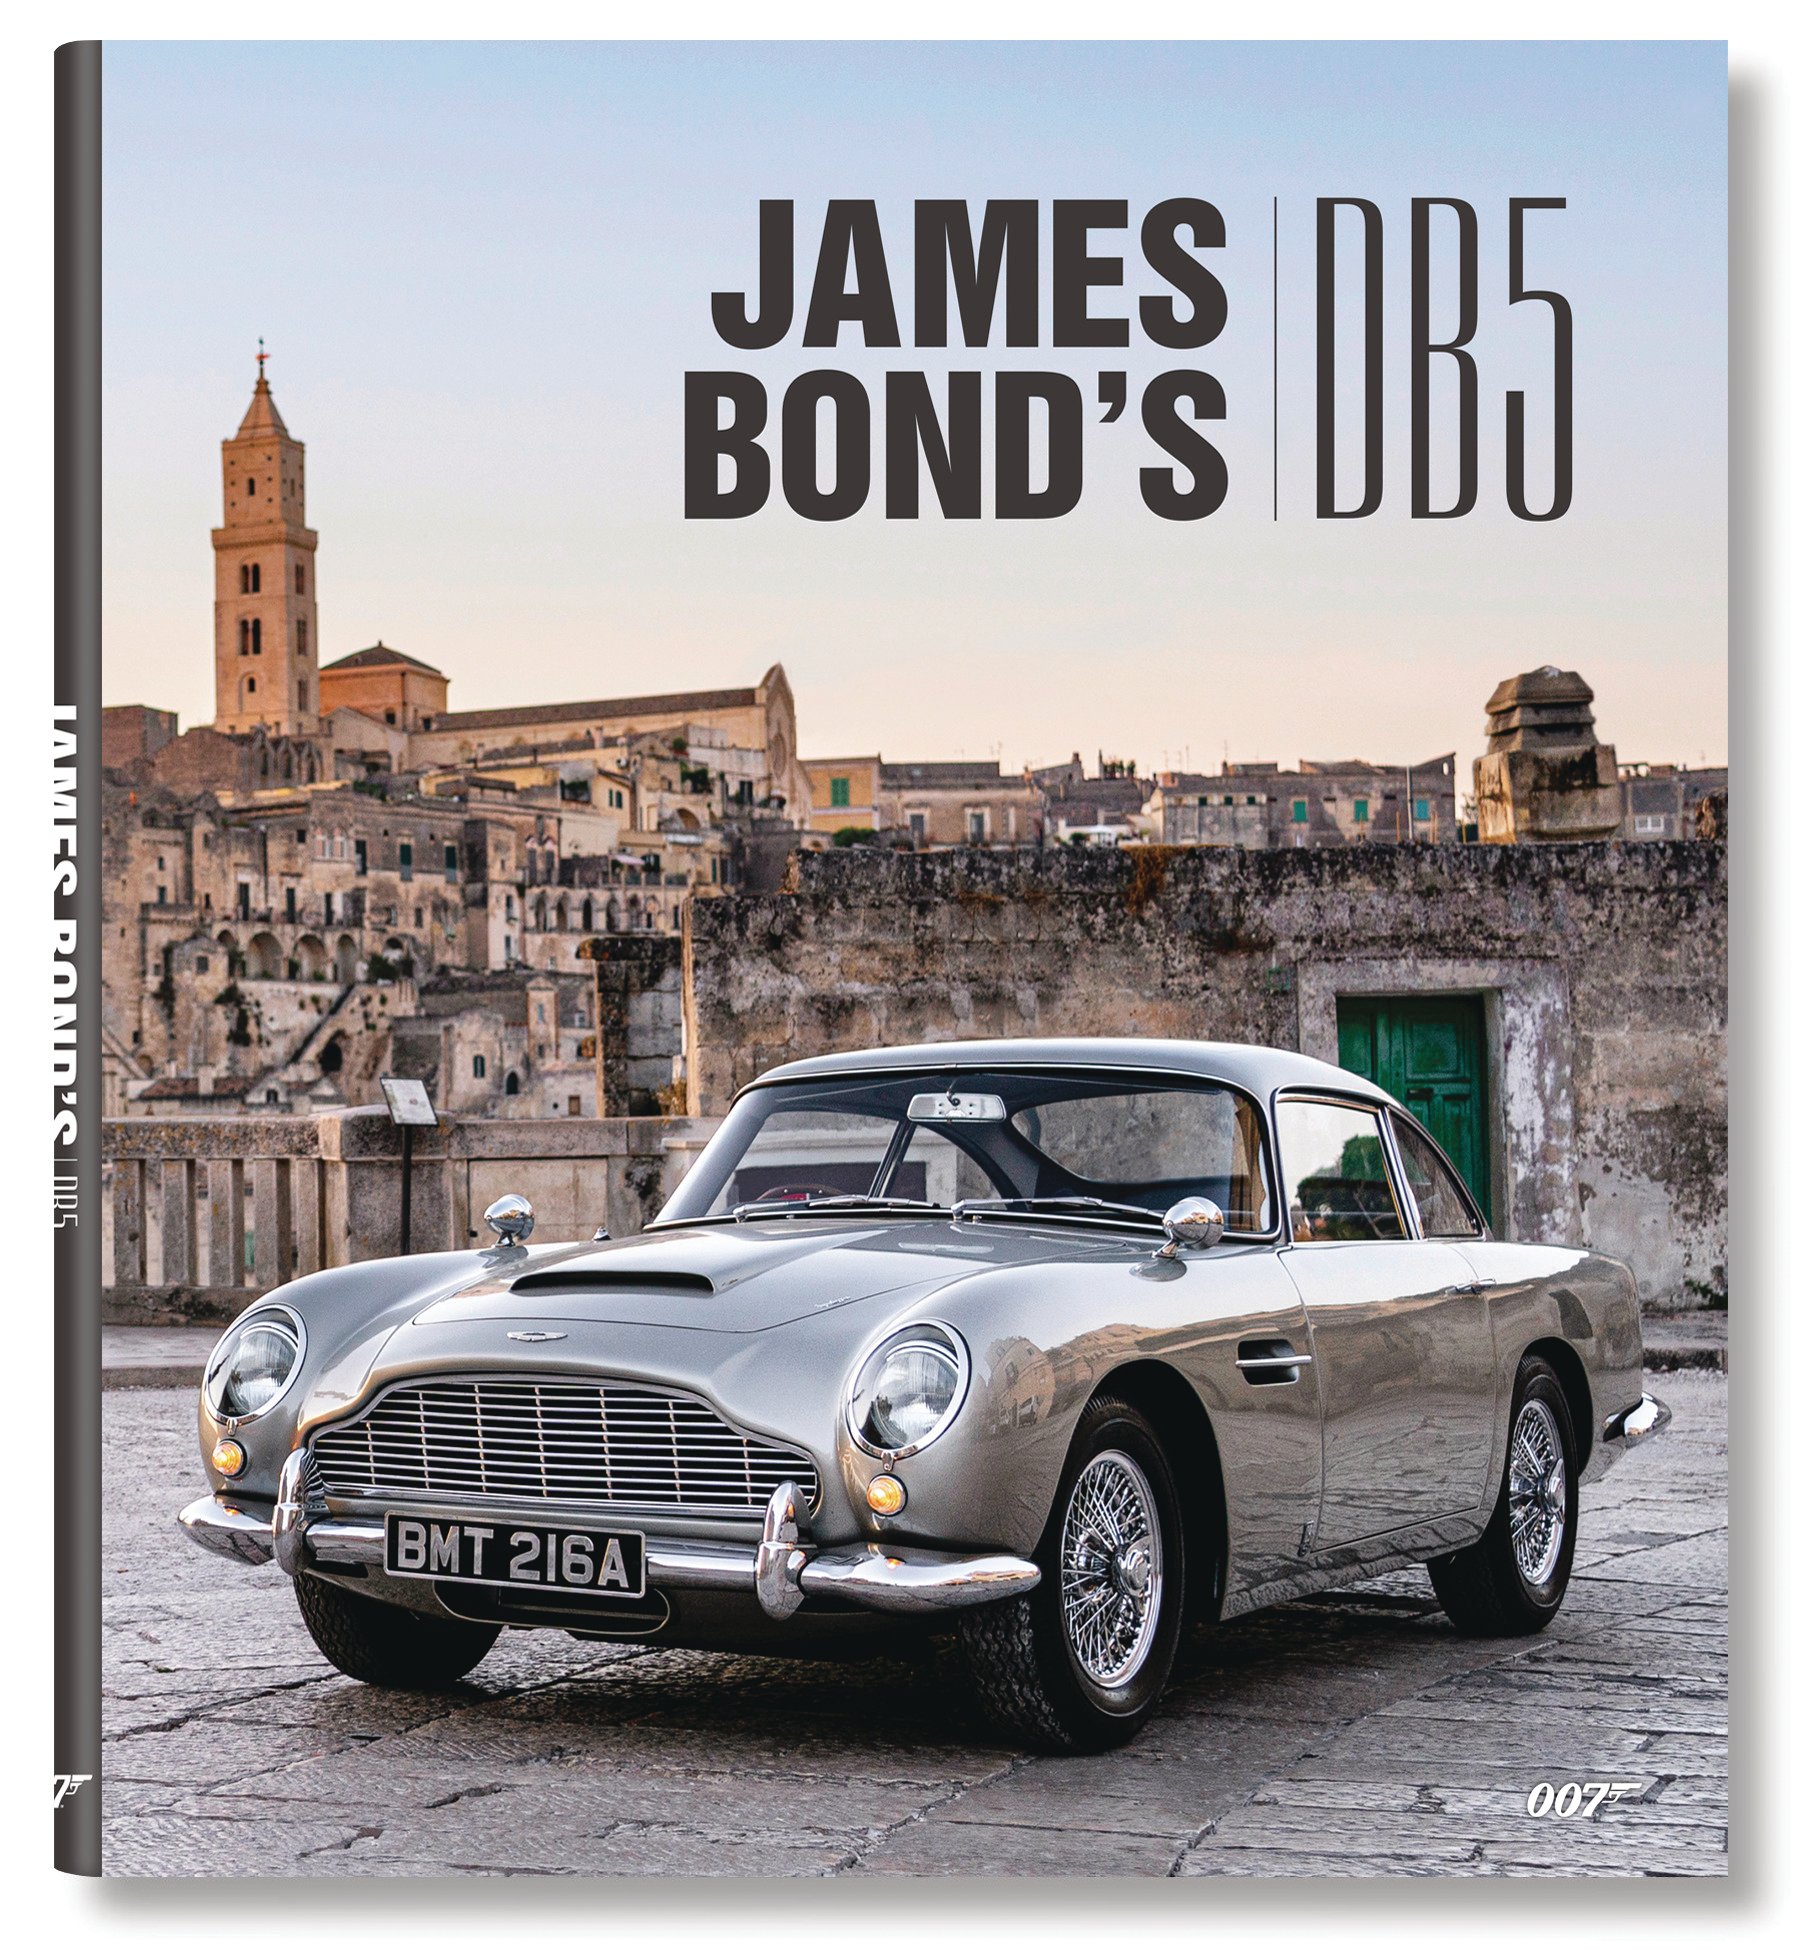 James Bond Aston Martin Db5 Hardcover